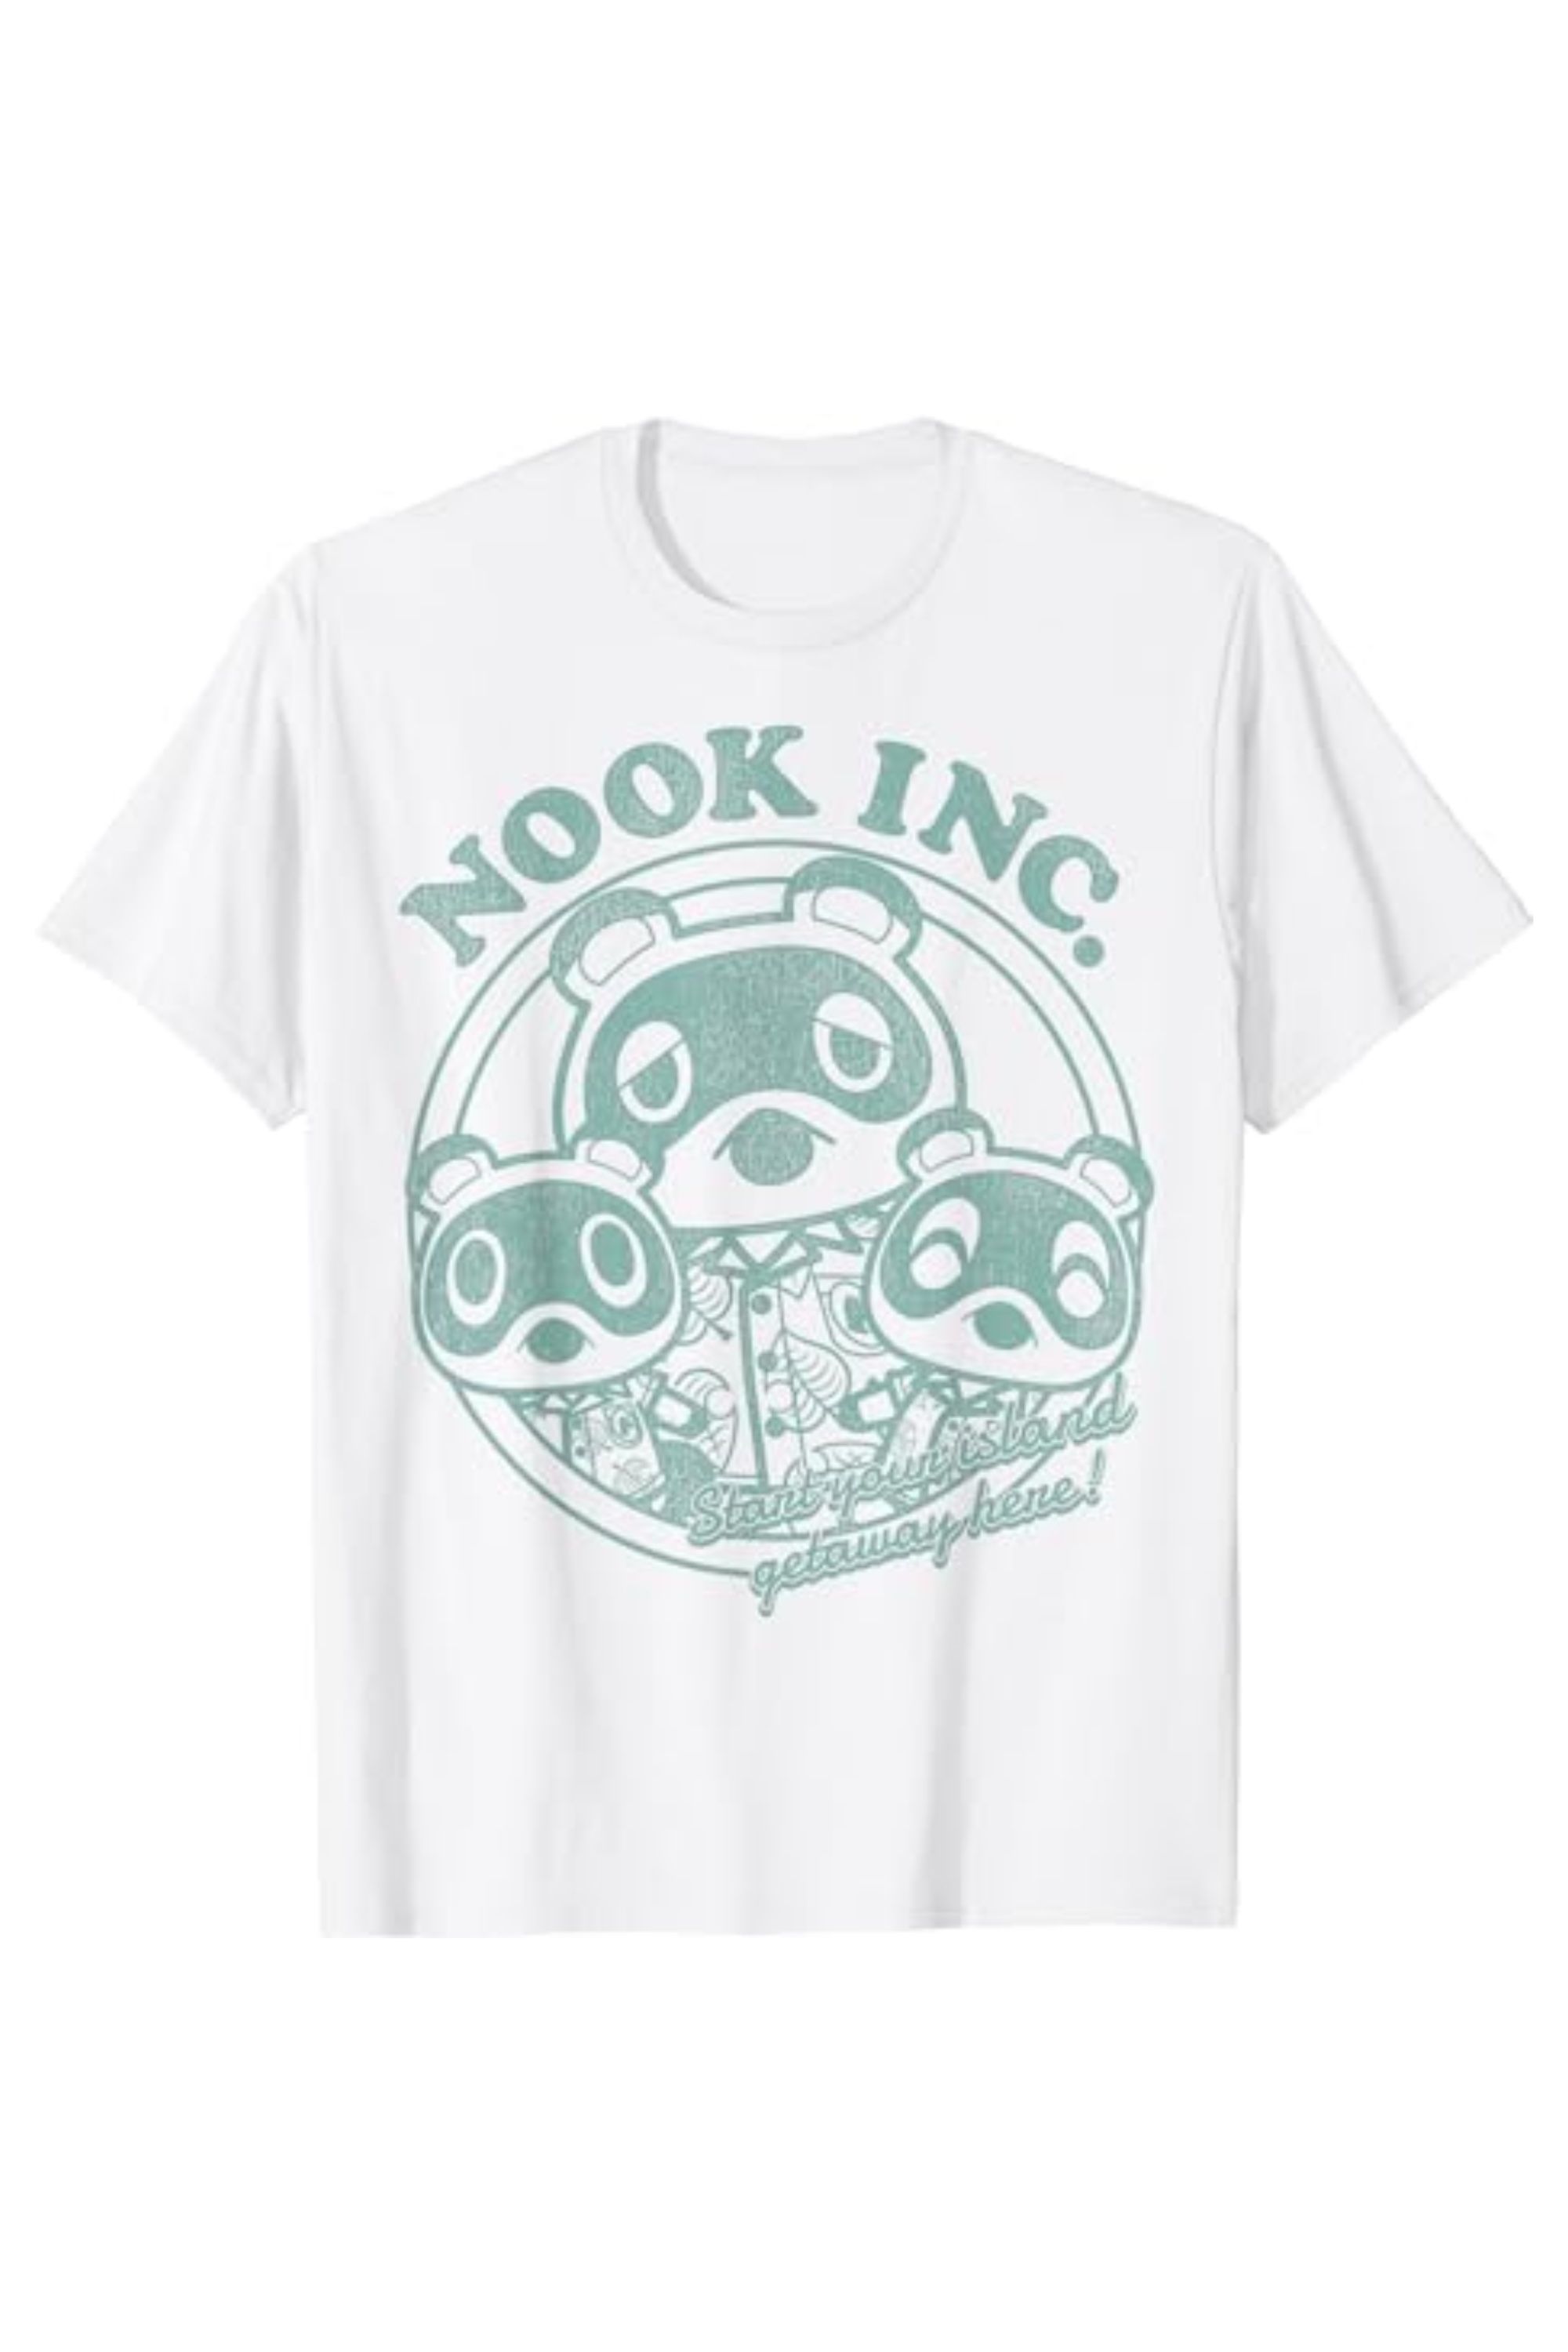 Animal Crossing Nook Inc. T-Shirt